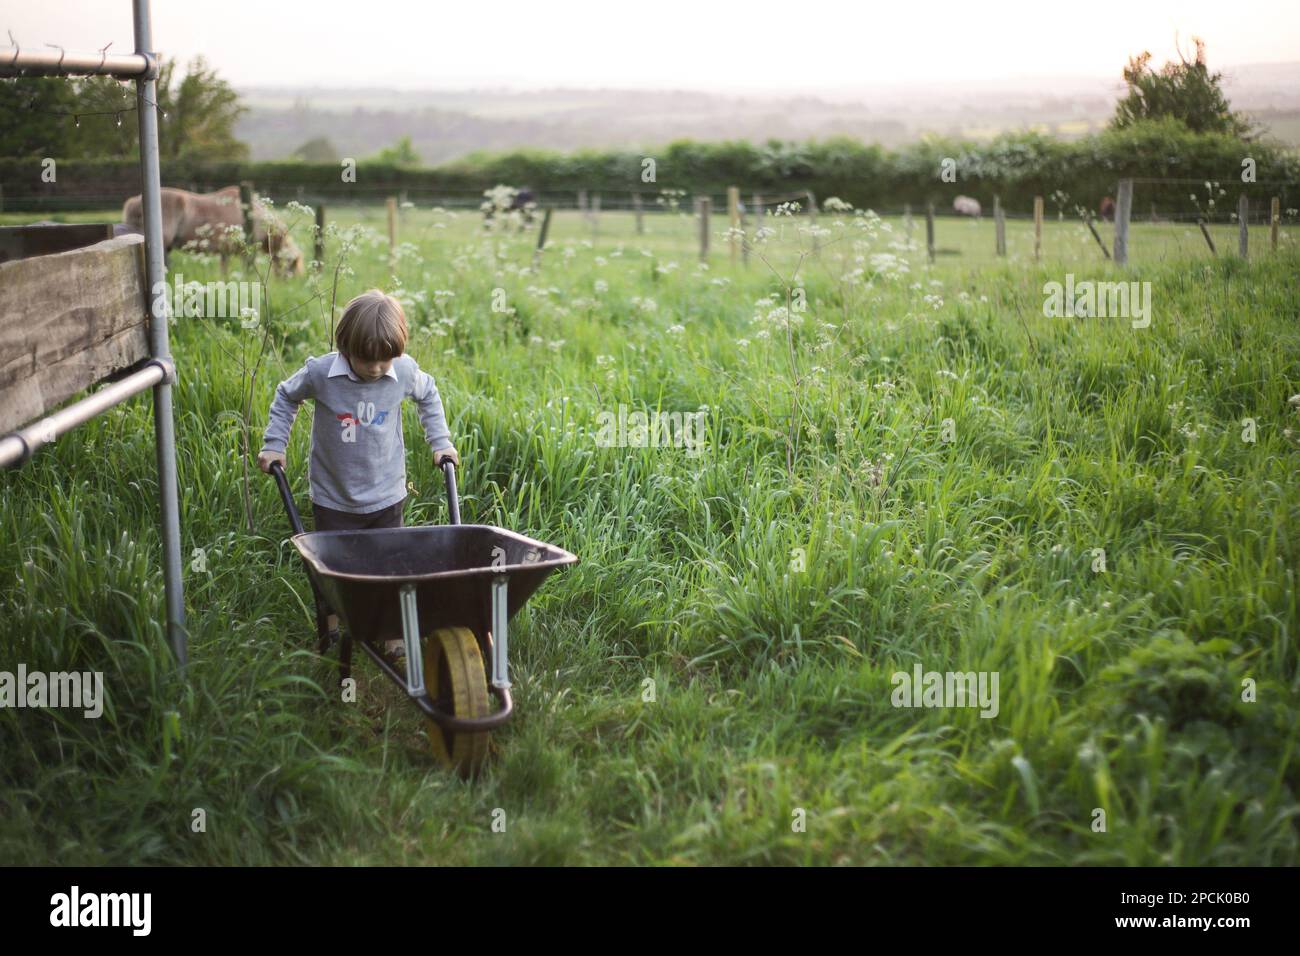 Child pushing a wheelbarrow outdoors Stock Photo